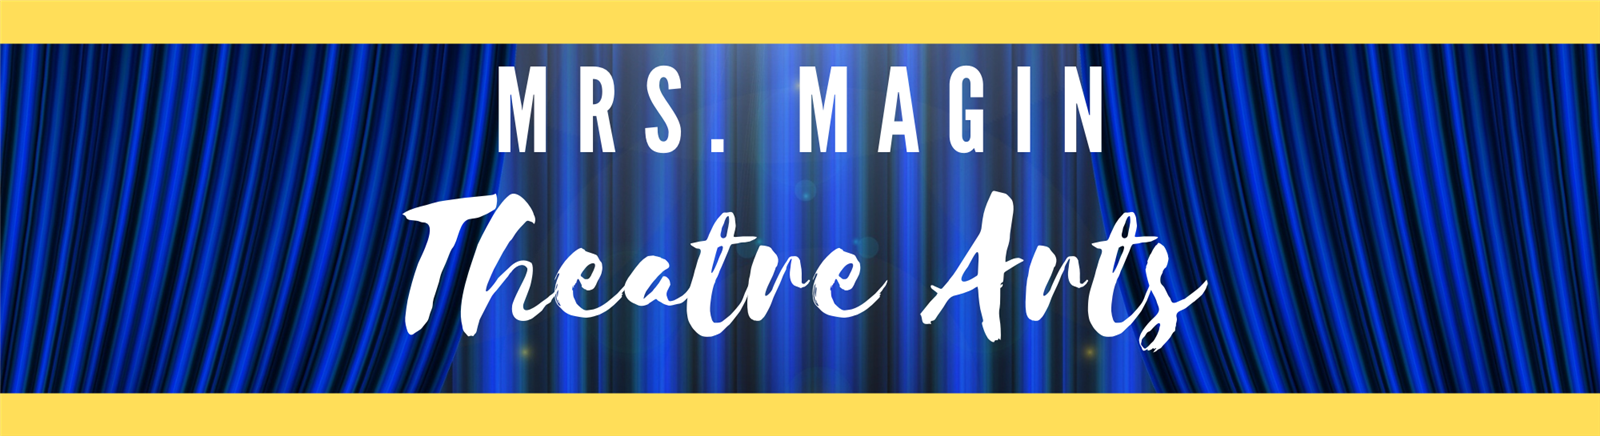 Mrs. Magin Theatre Arts